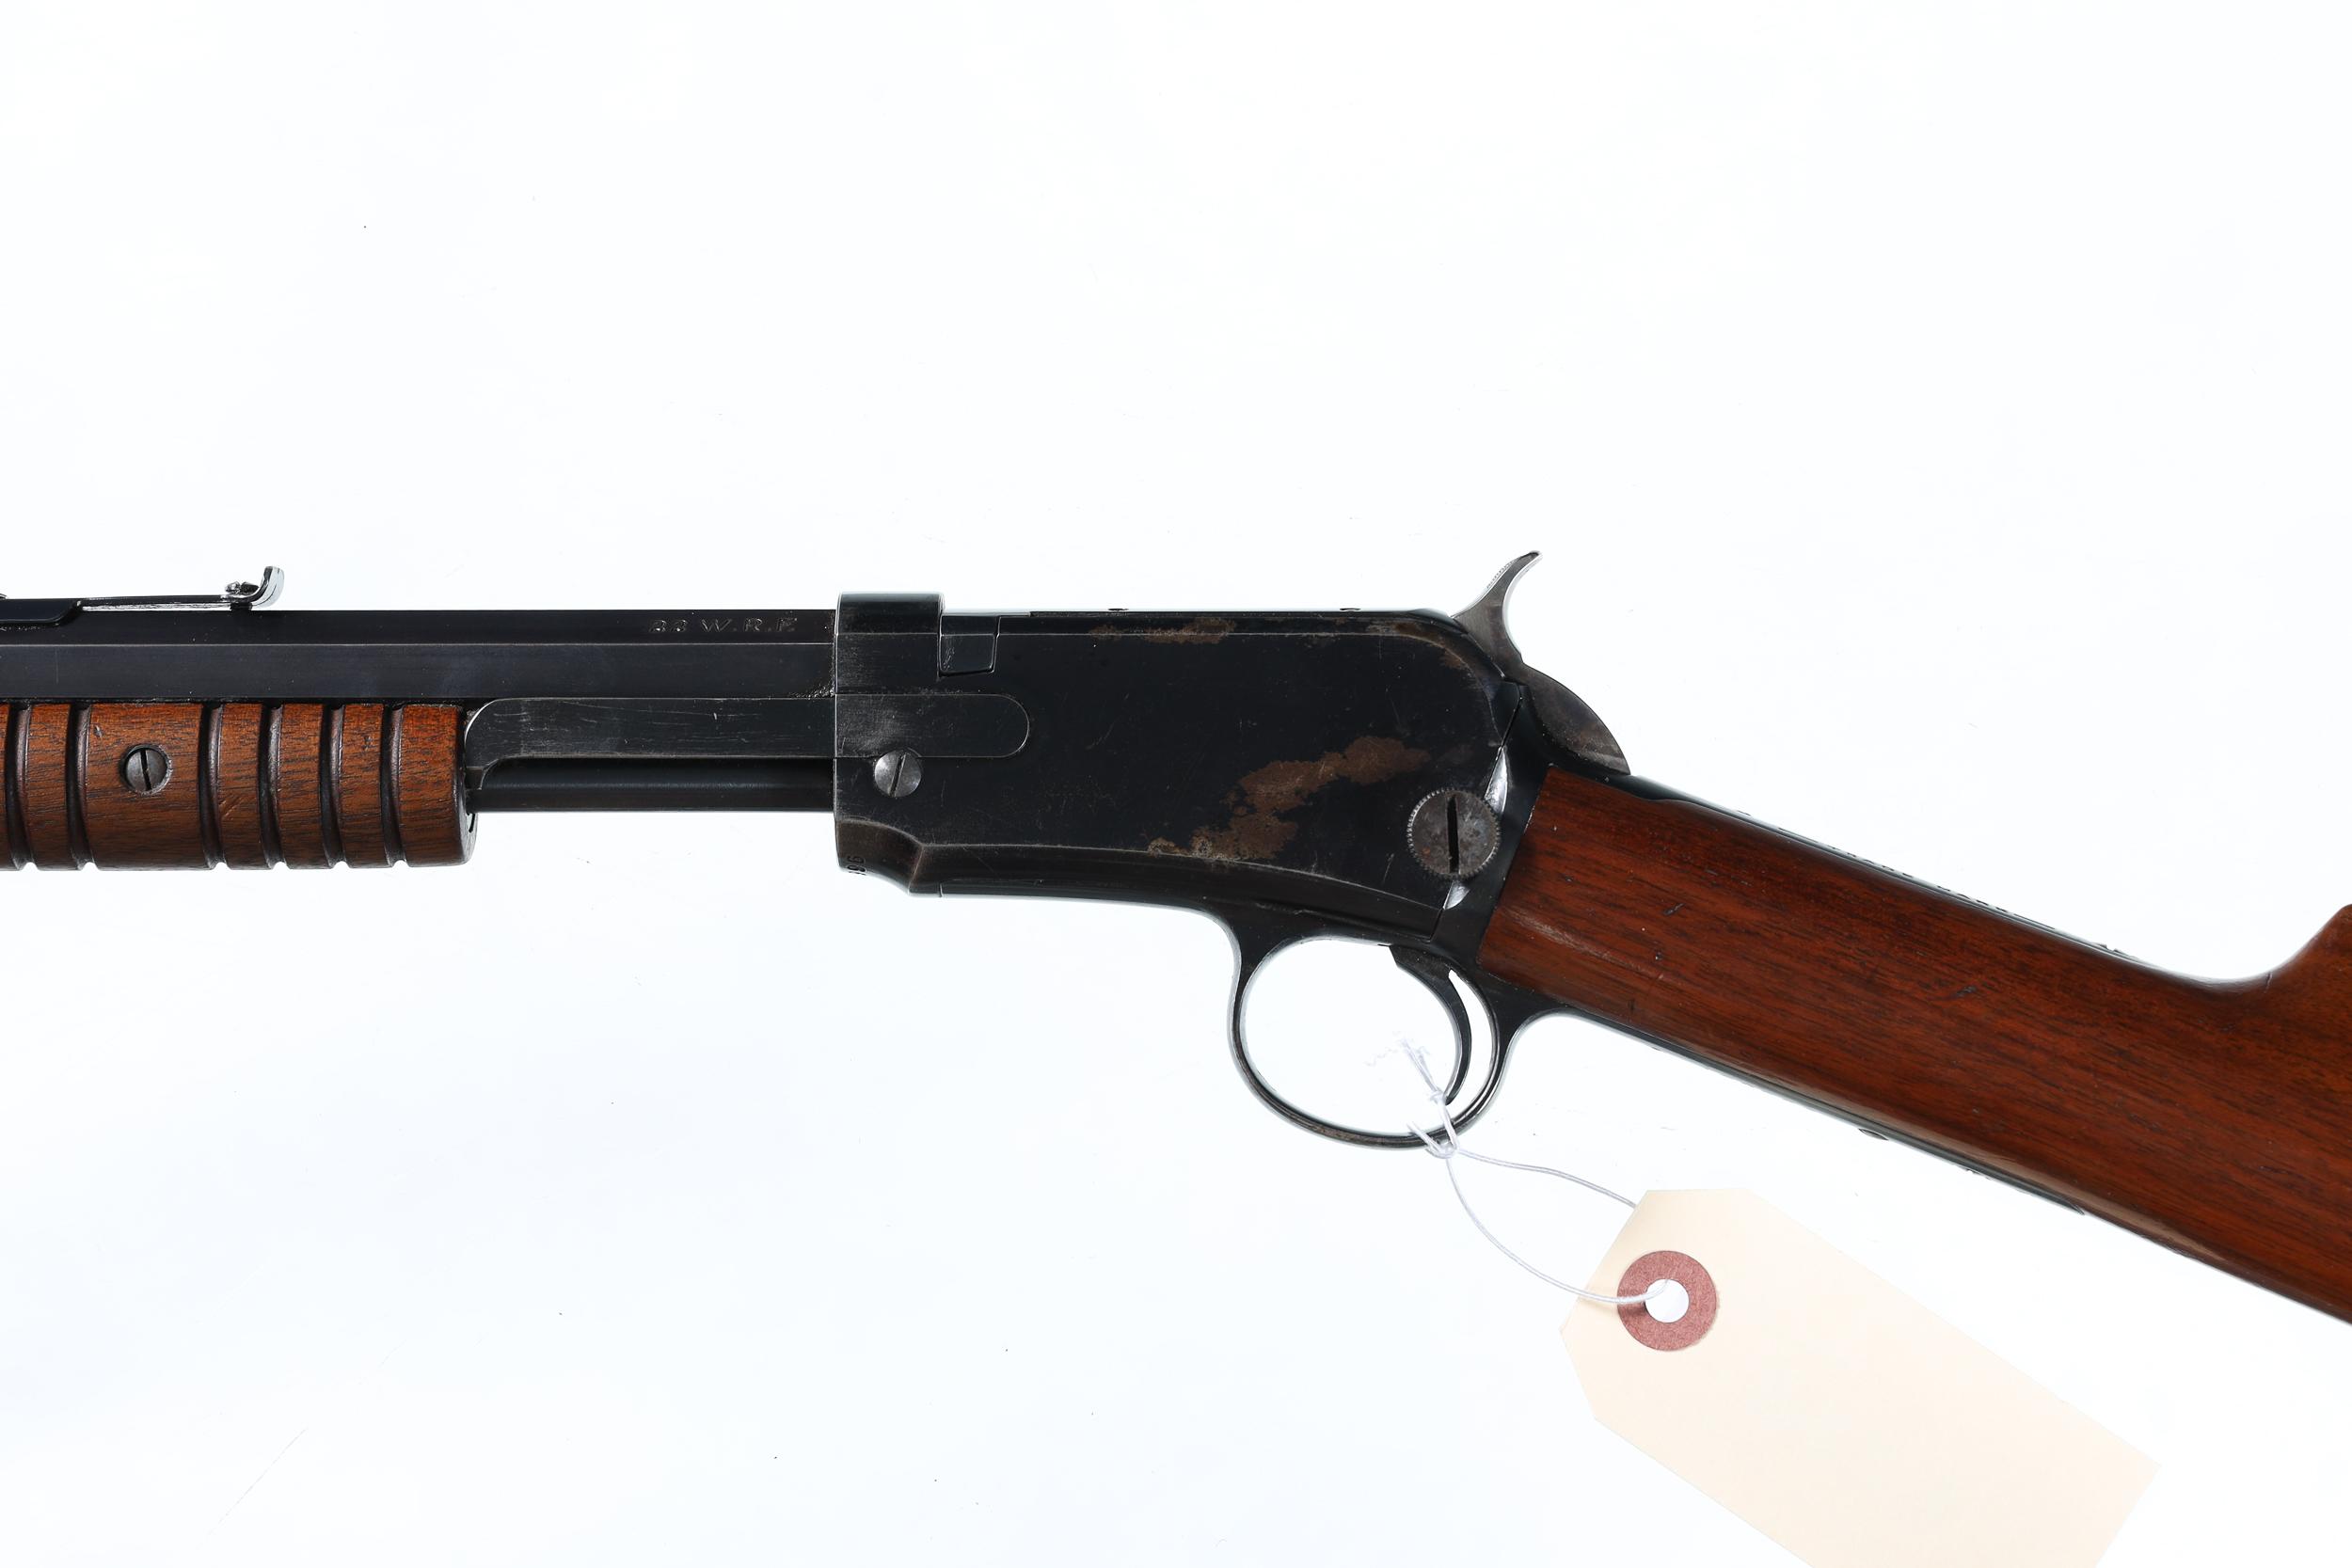 Winchester 1890 Slide Rifle .22 wrf